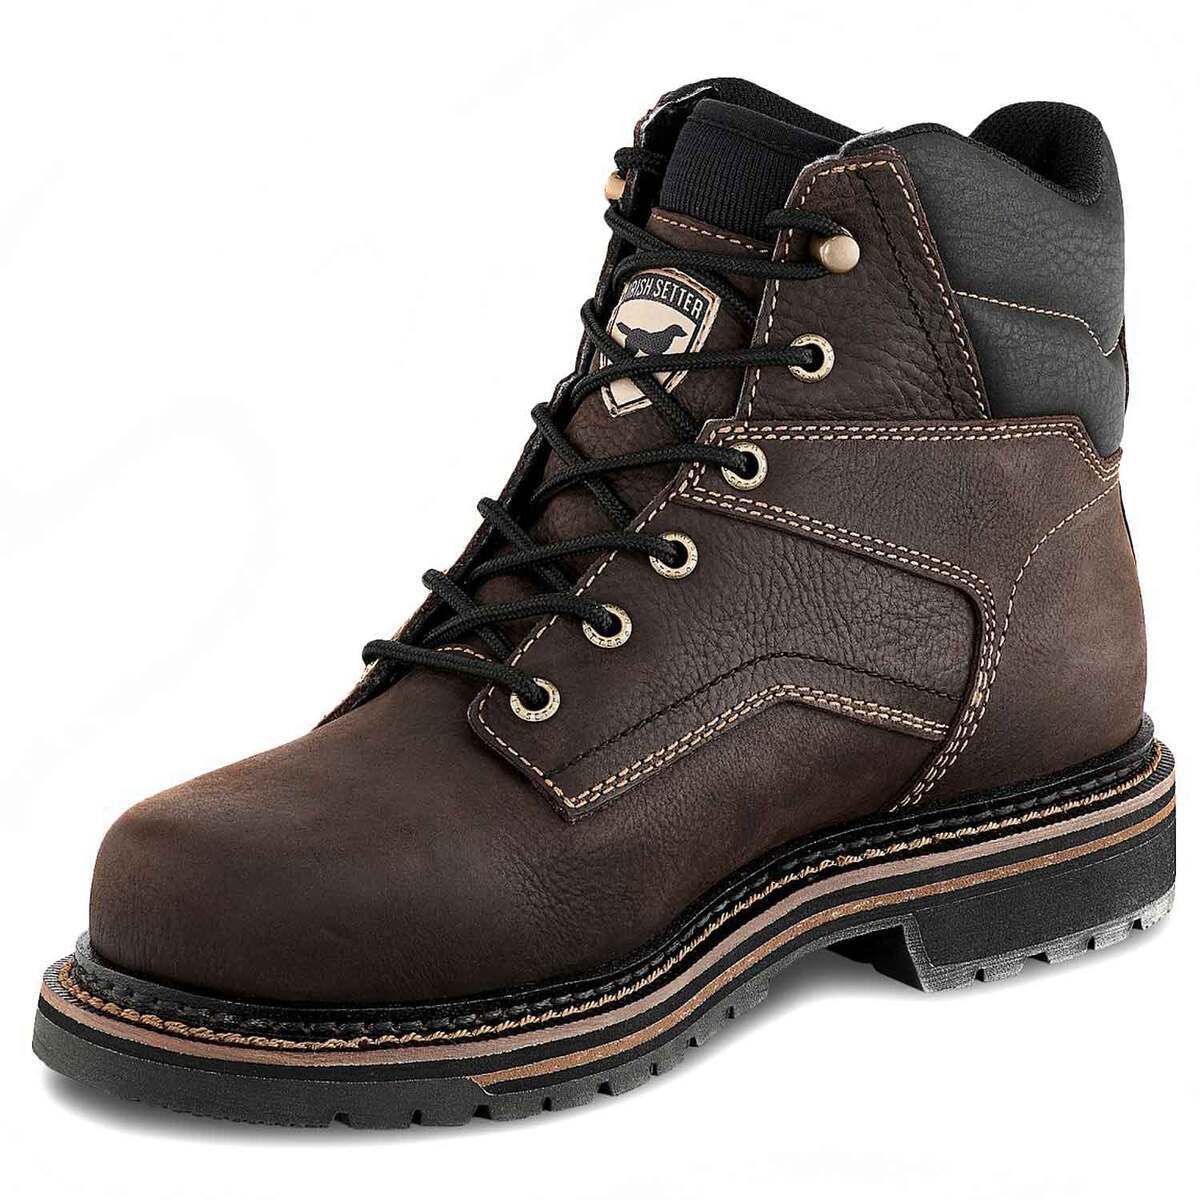 Irish Setter Women's Kittson Steel Toe Work Boots - Brown - Size 9.5 B ...